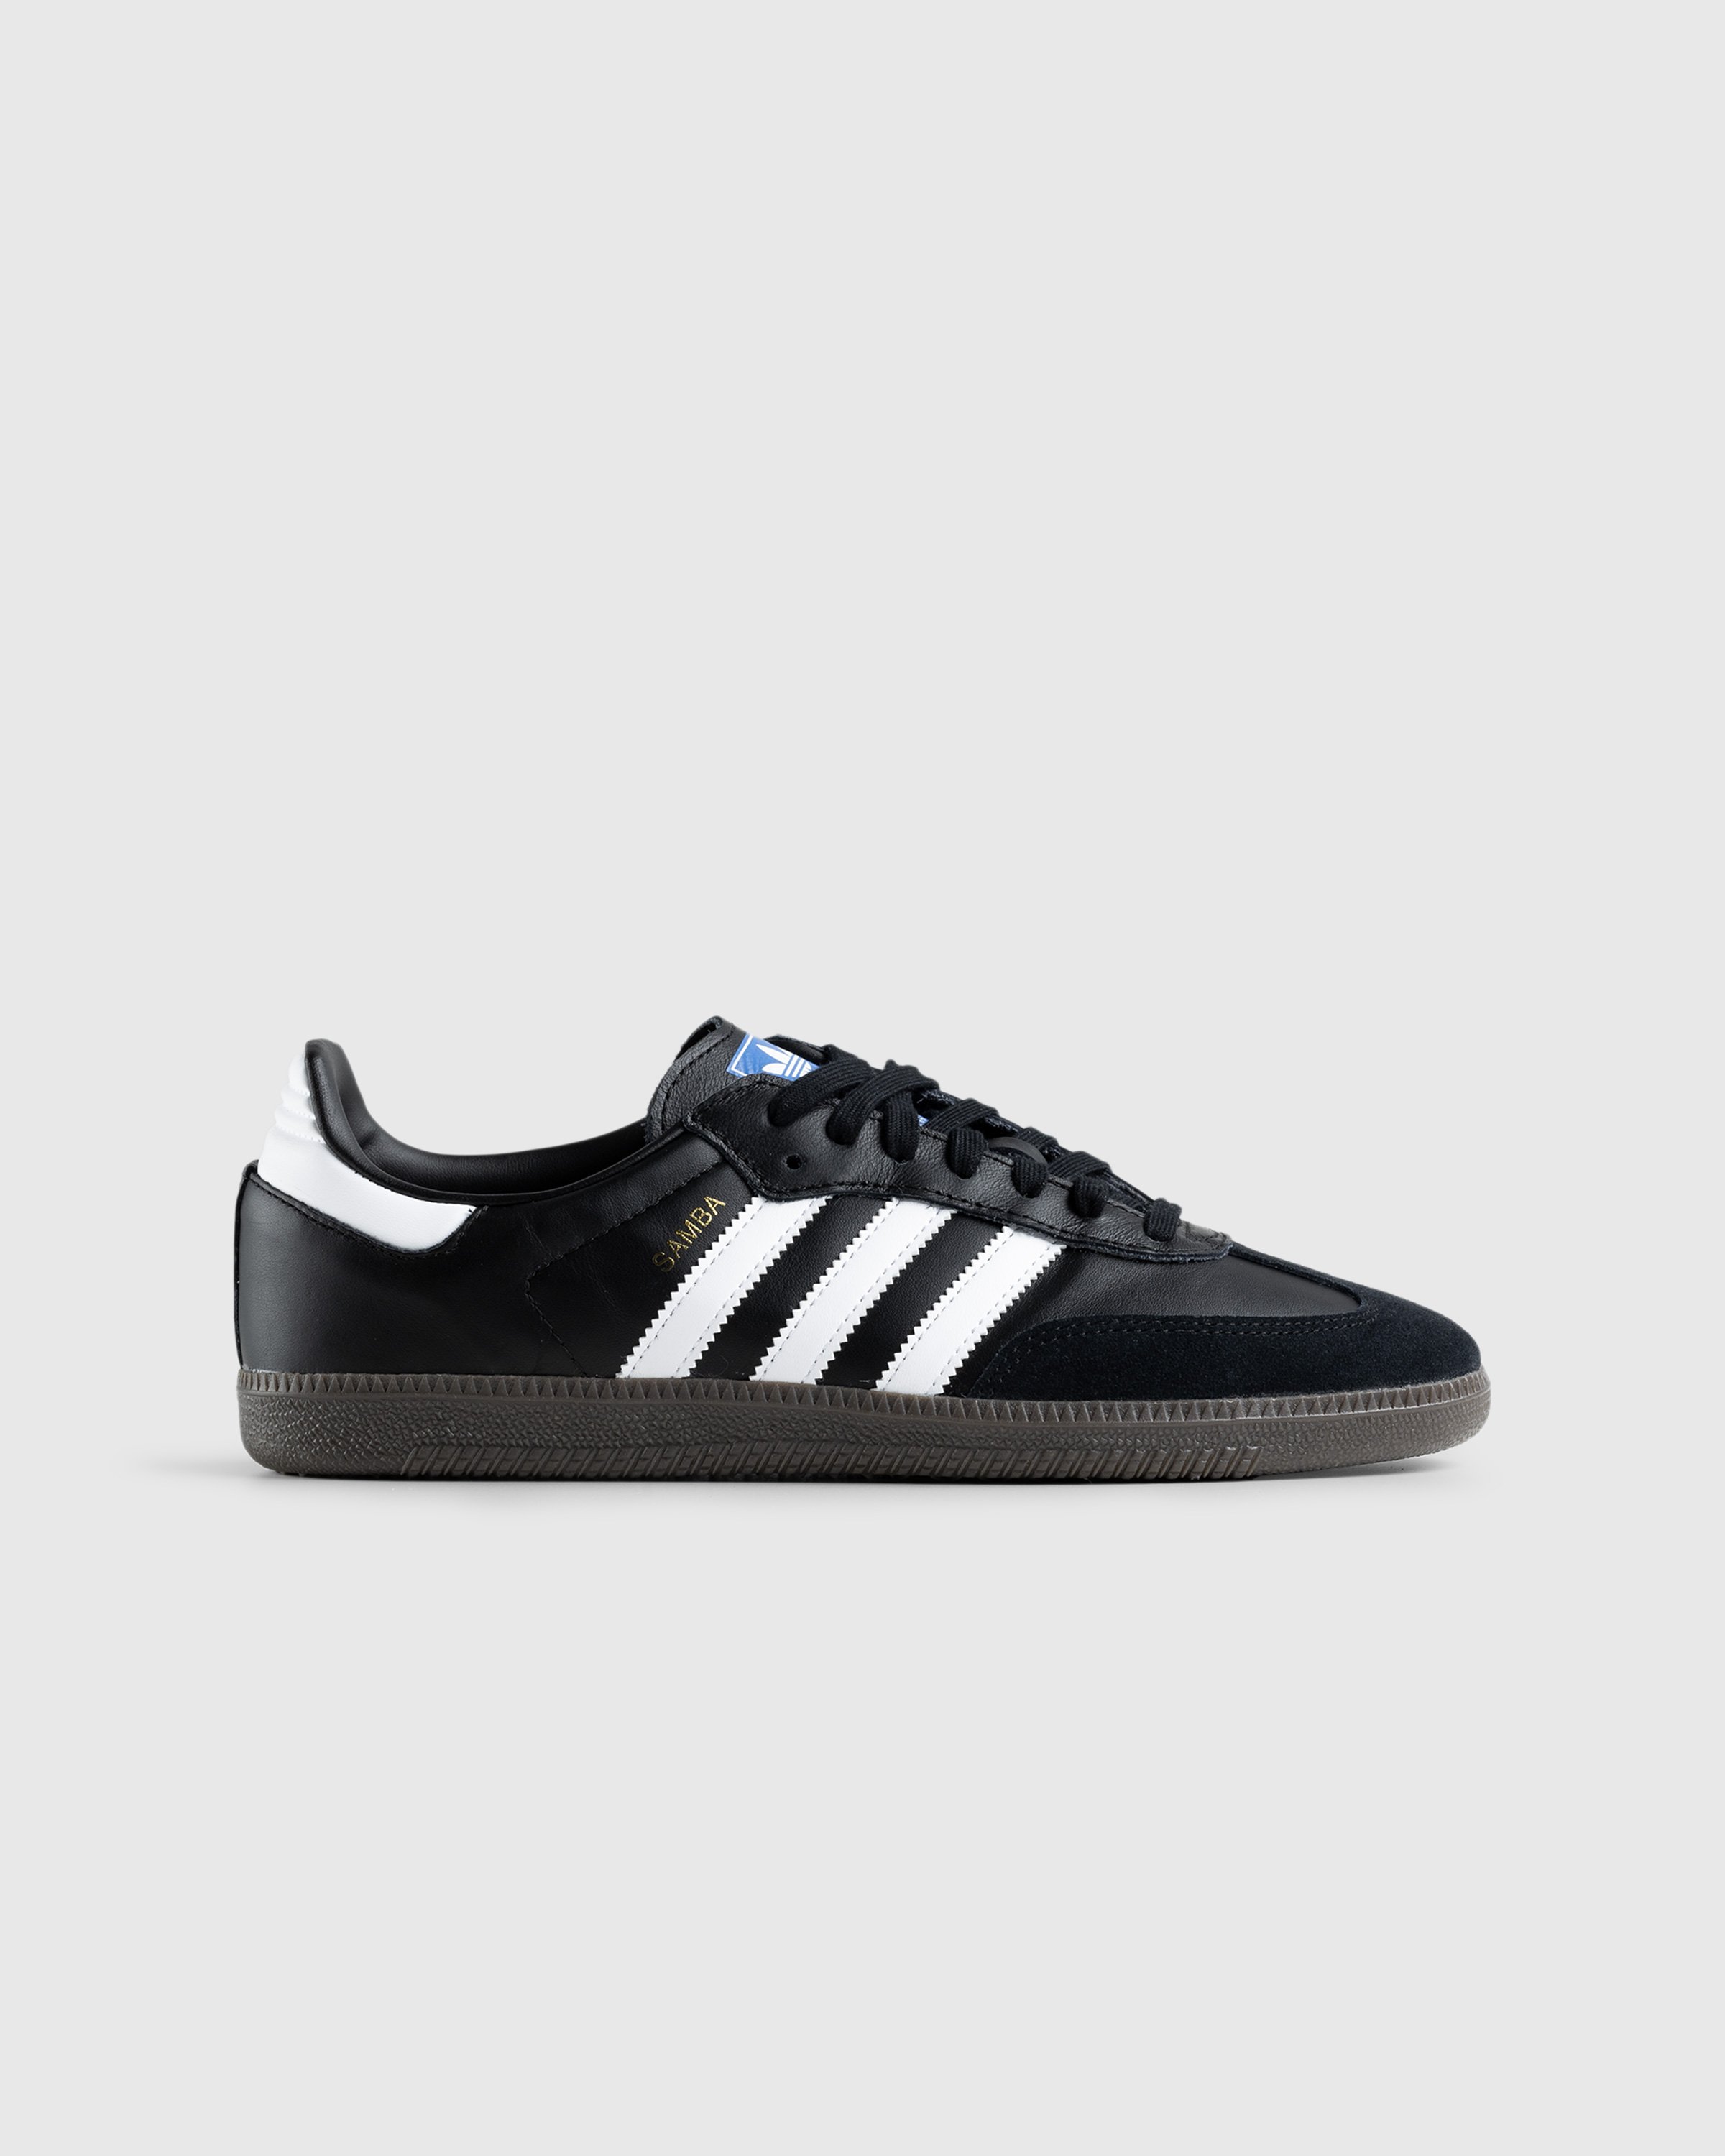 Adidas - Samba OG Black/White/Gum - Footwear - Black - Image 1